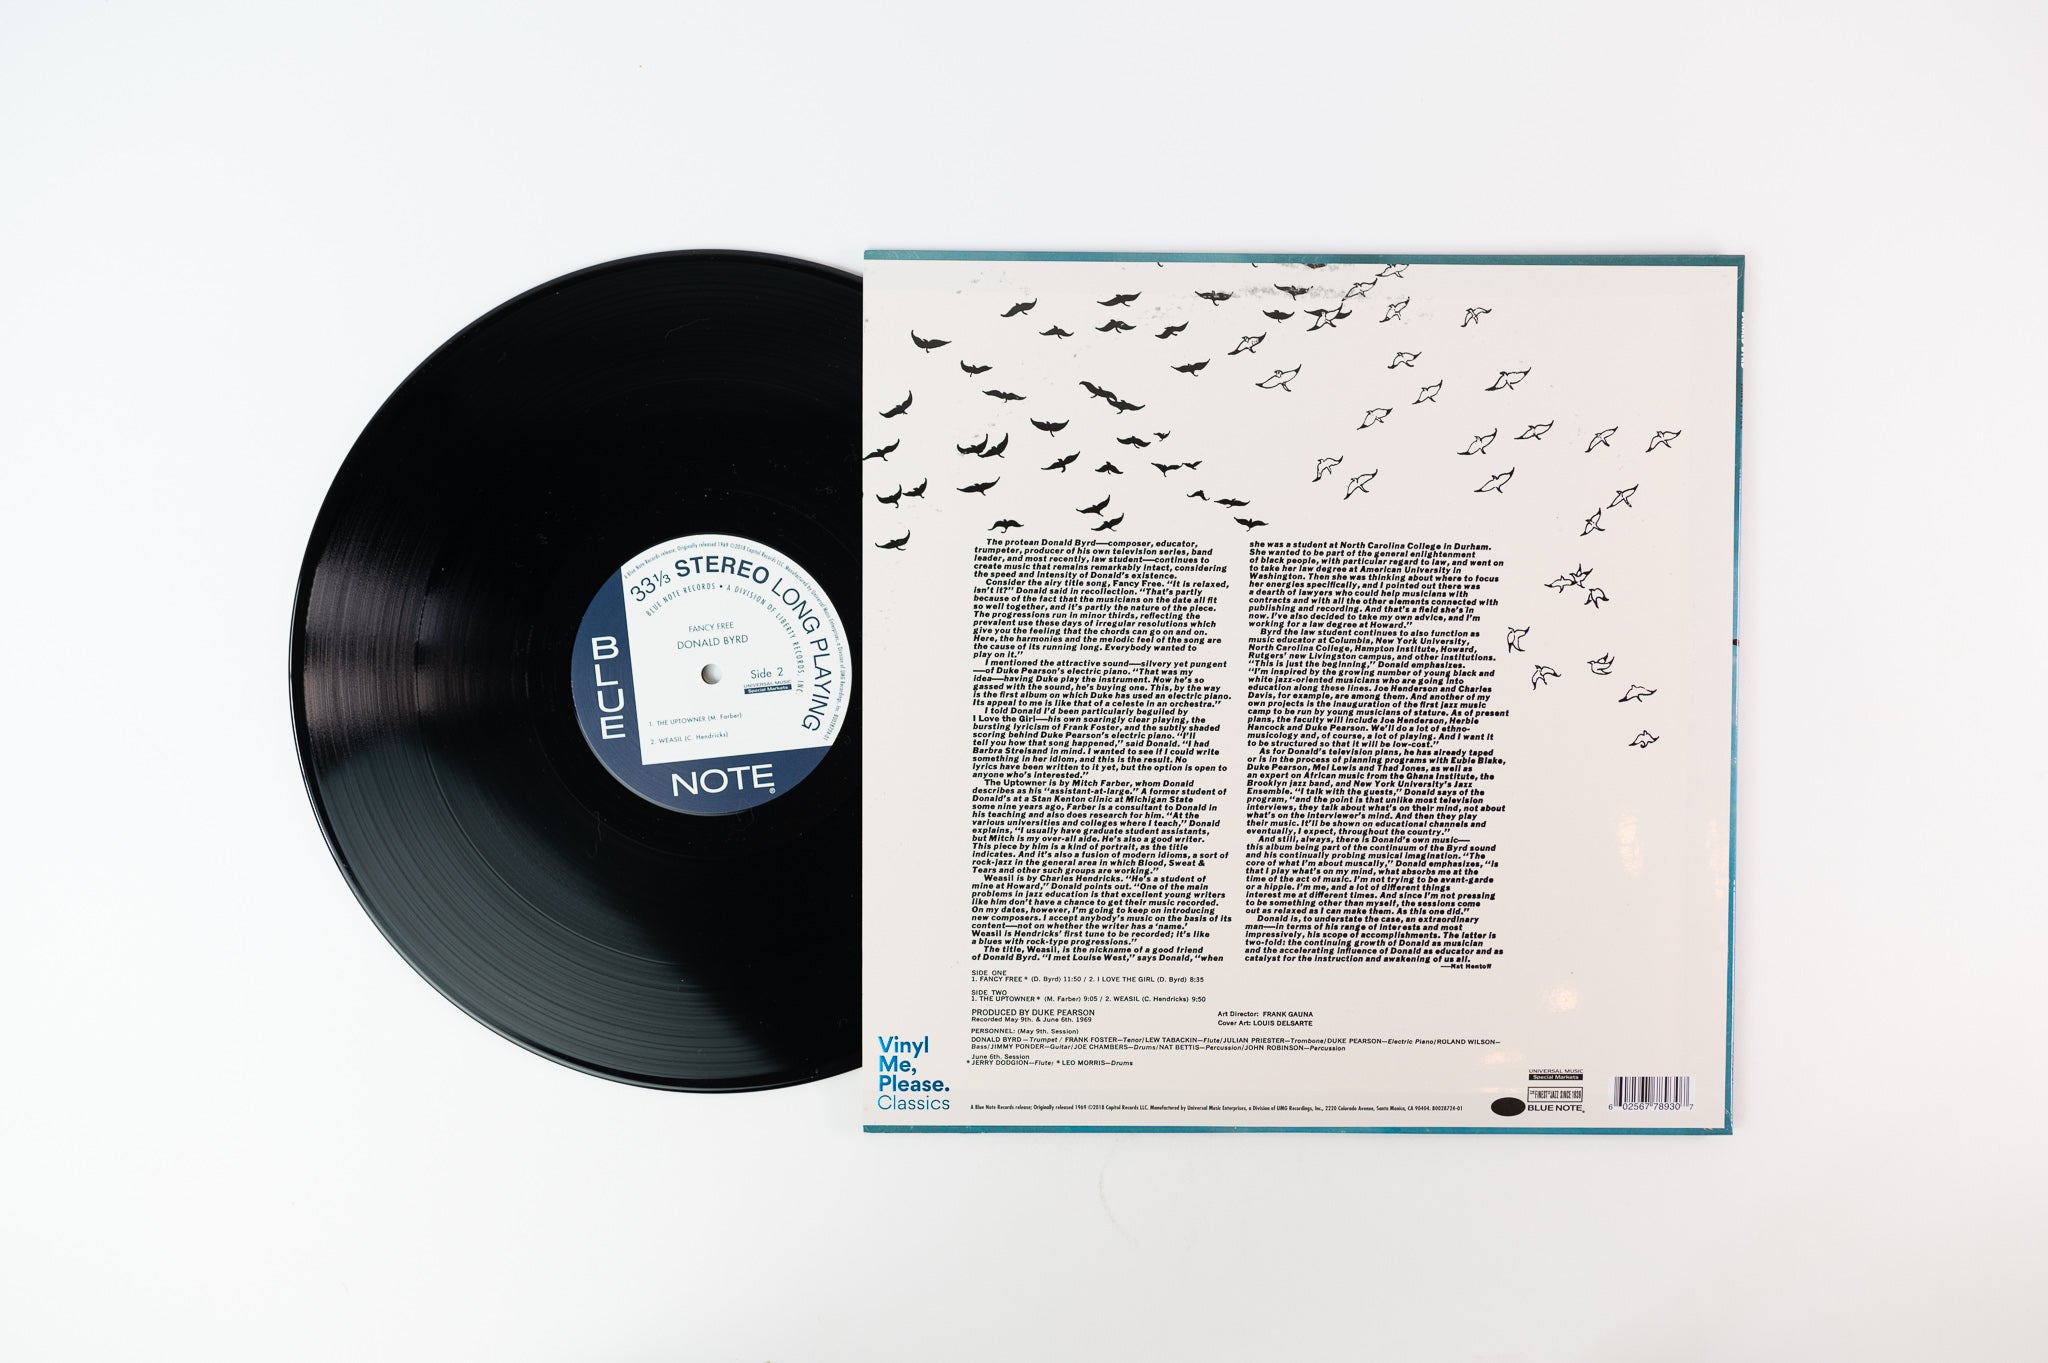 Donald Byrd - Fancy Free on Blue Note Vinyl Me Please Classics 180 Gram Reissue